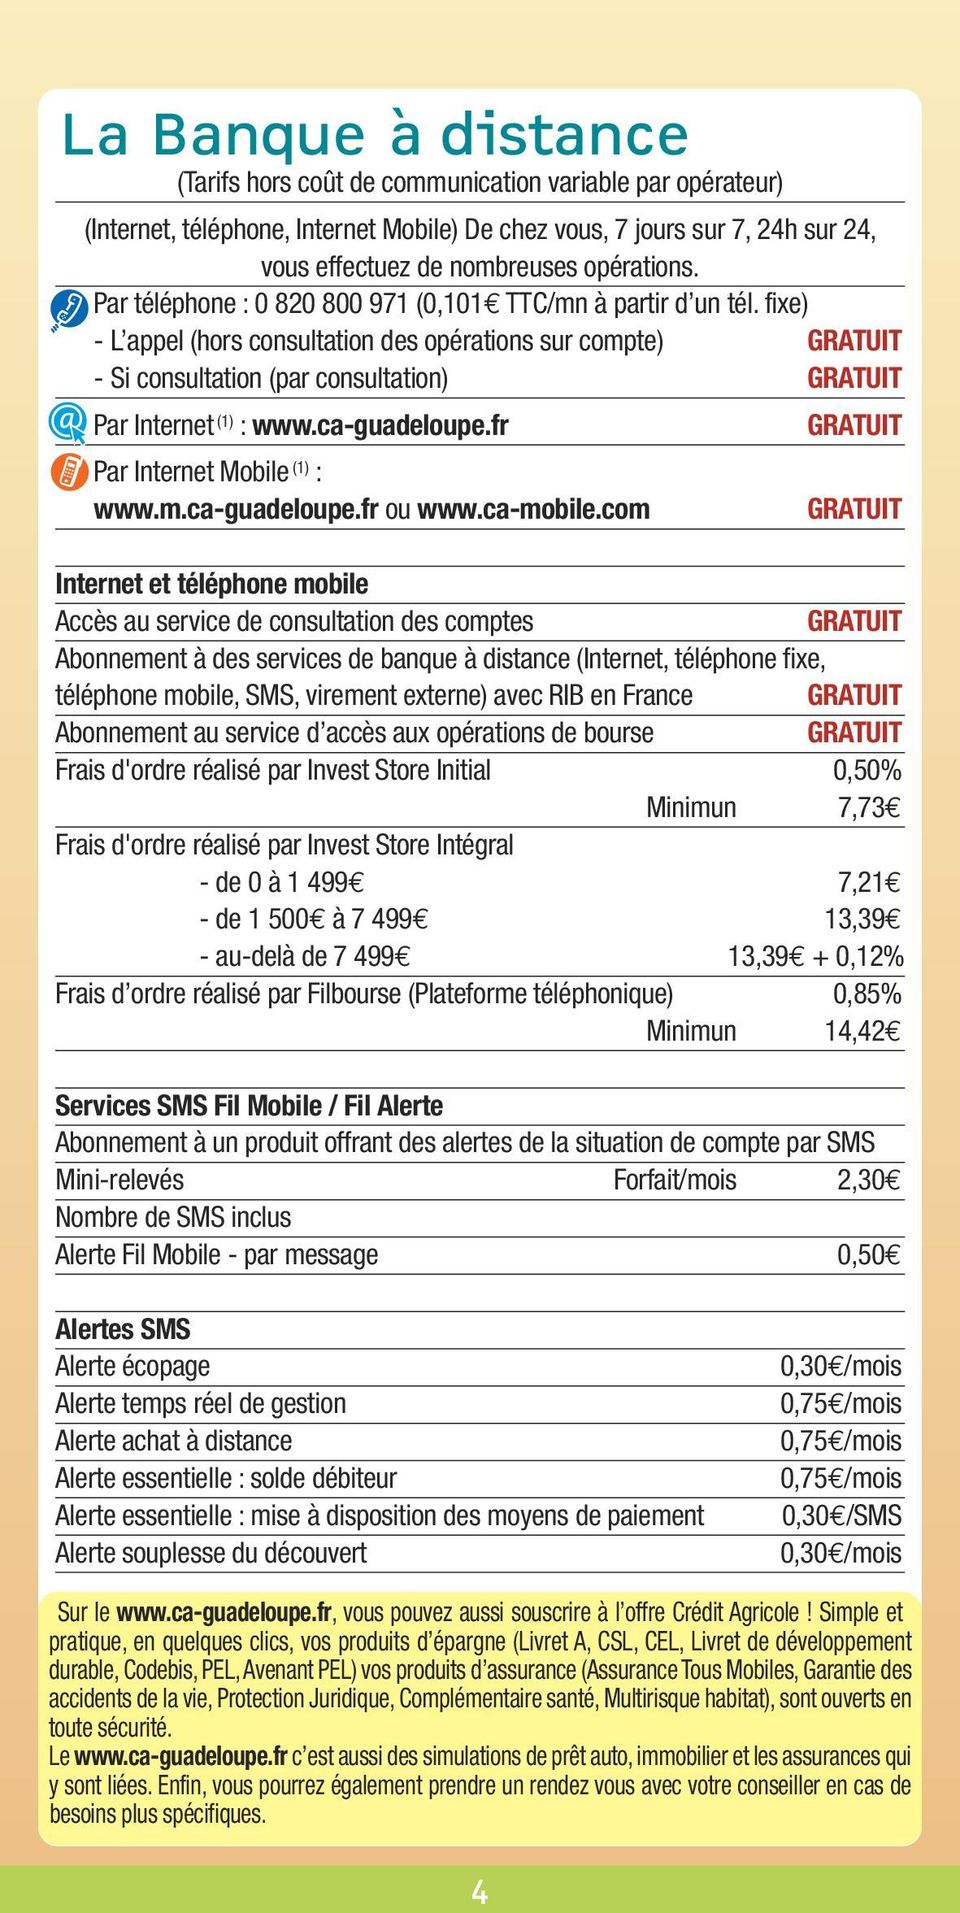 fr Par Internet Mobile (1) : www.m.ca-guadeloupe.fr ou www.ca-mobile.